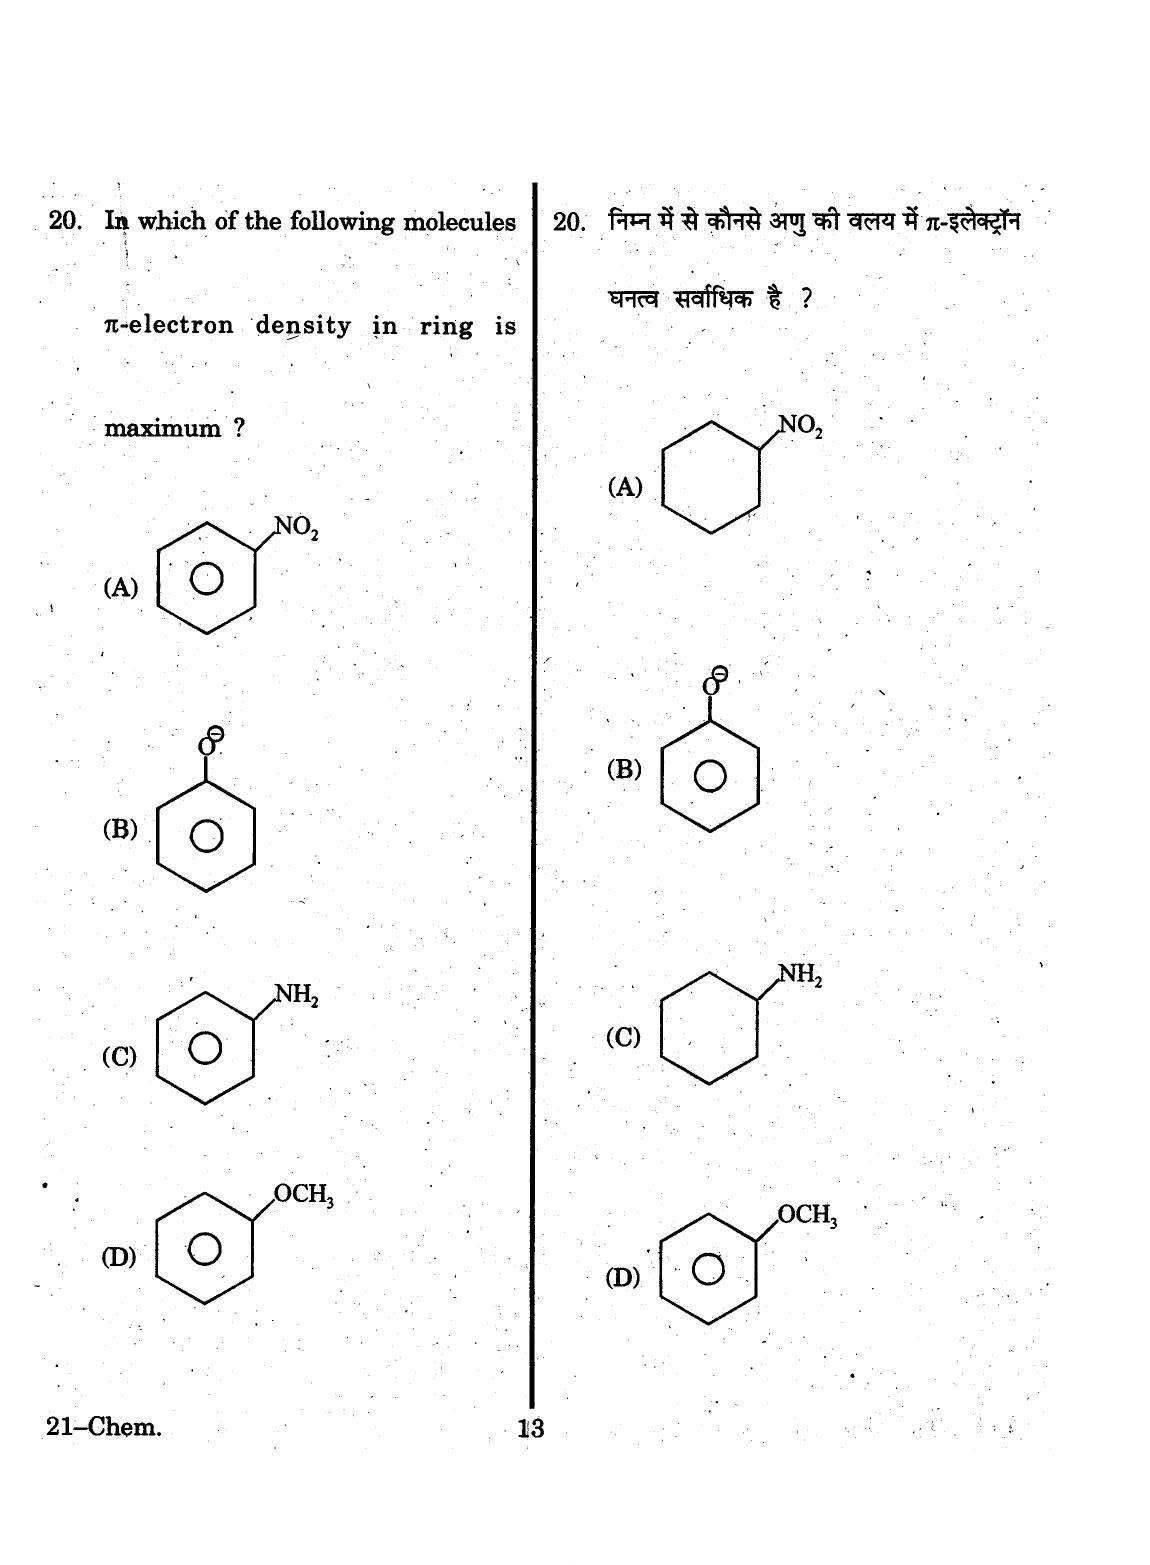 URATPG 2015 Chemisty Question Paper - Page 13